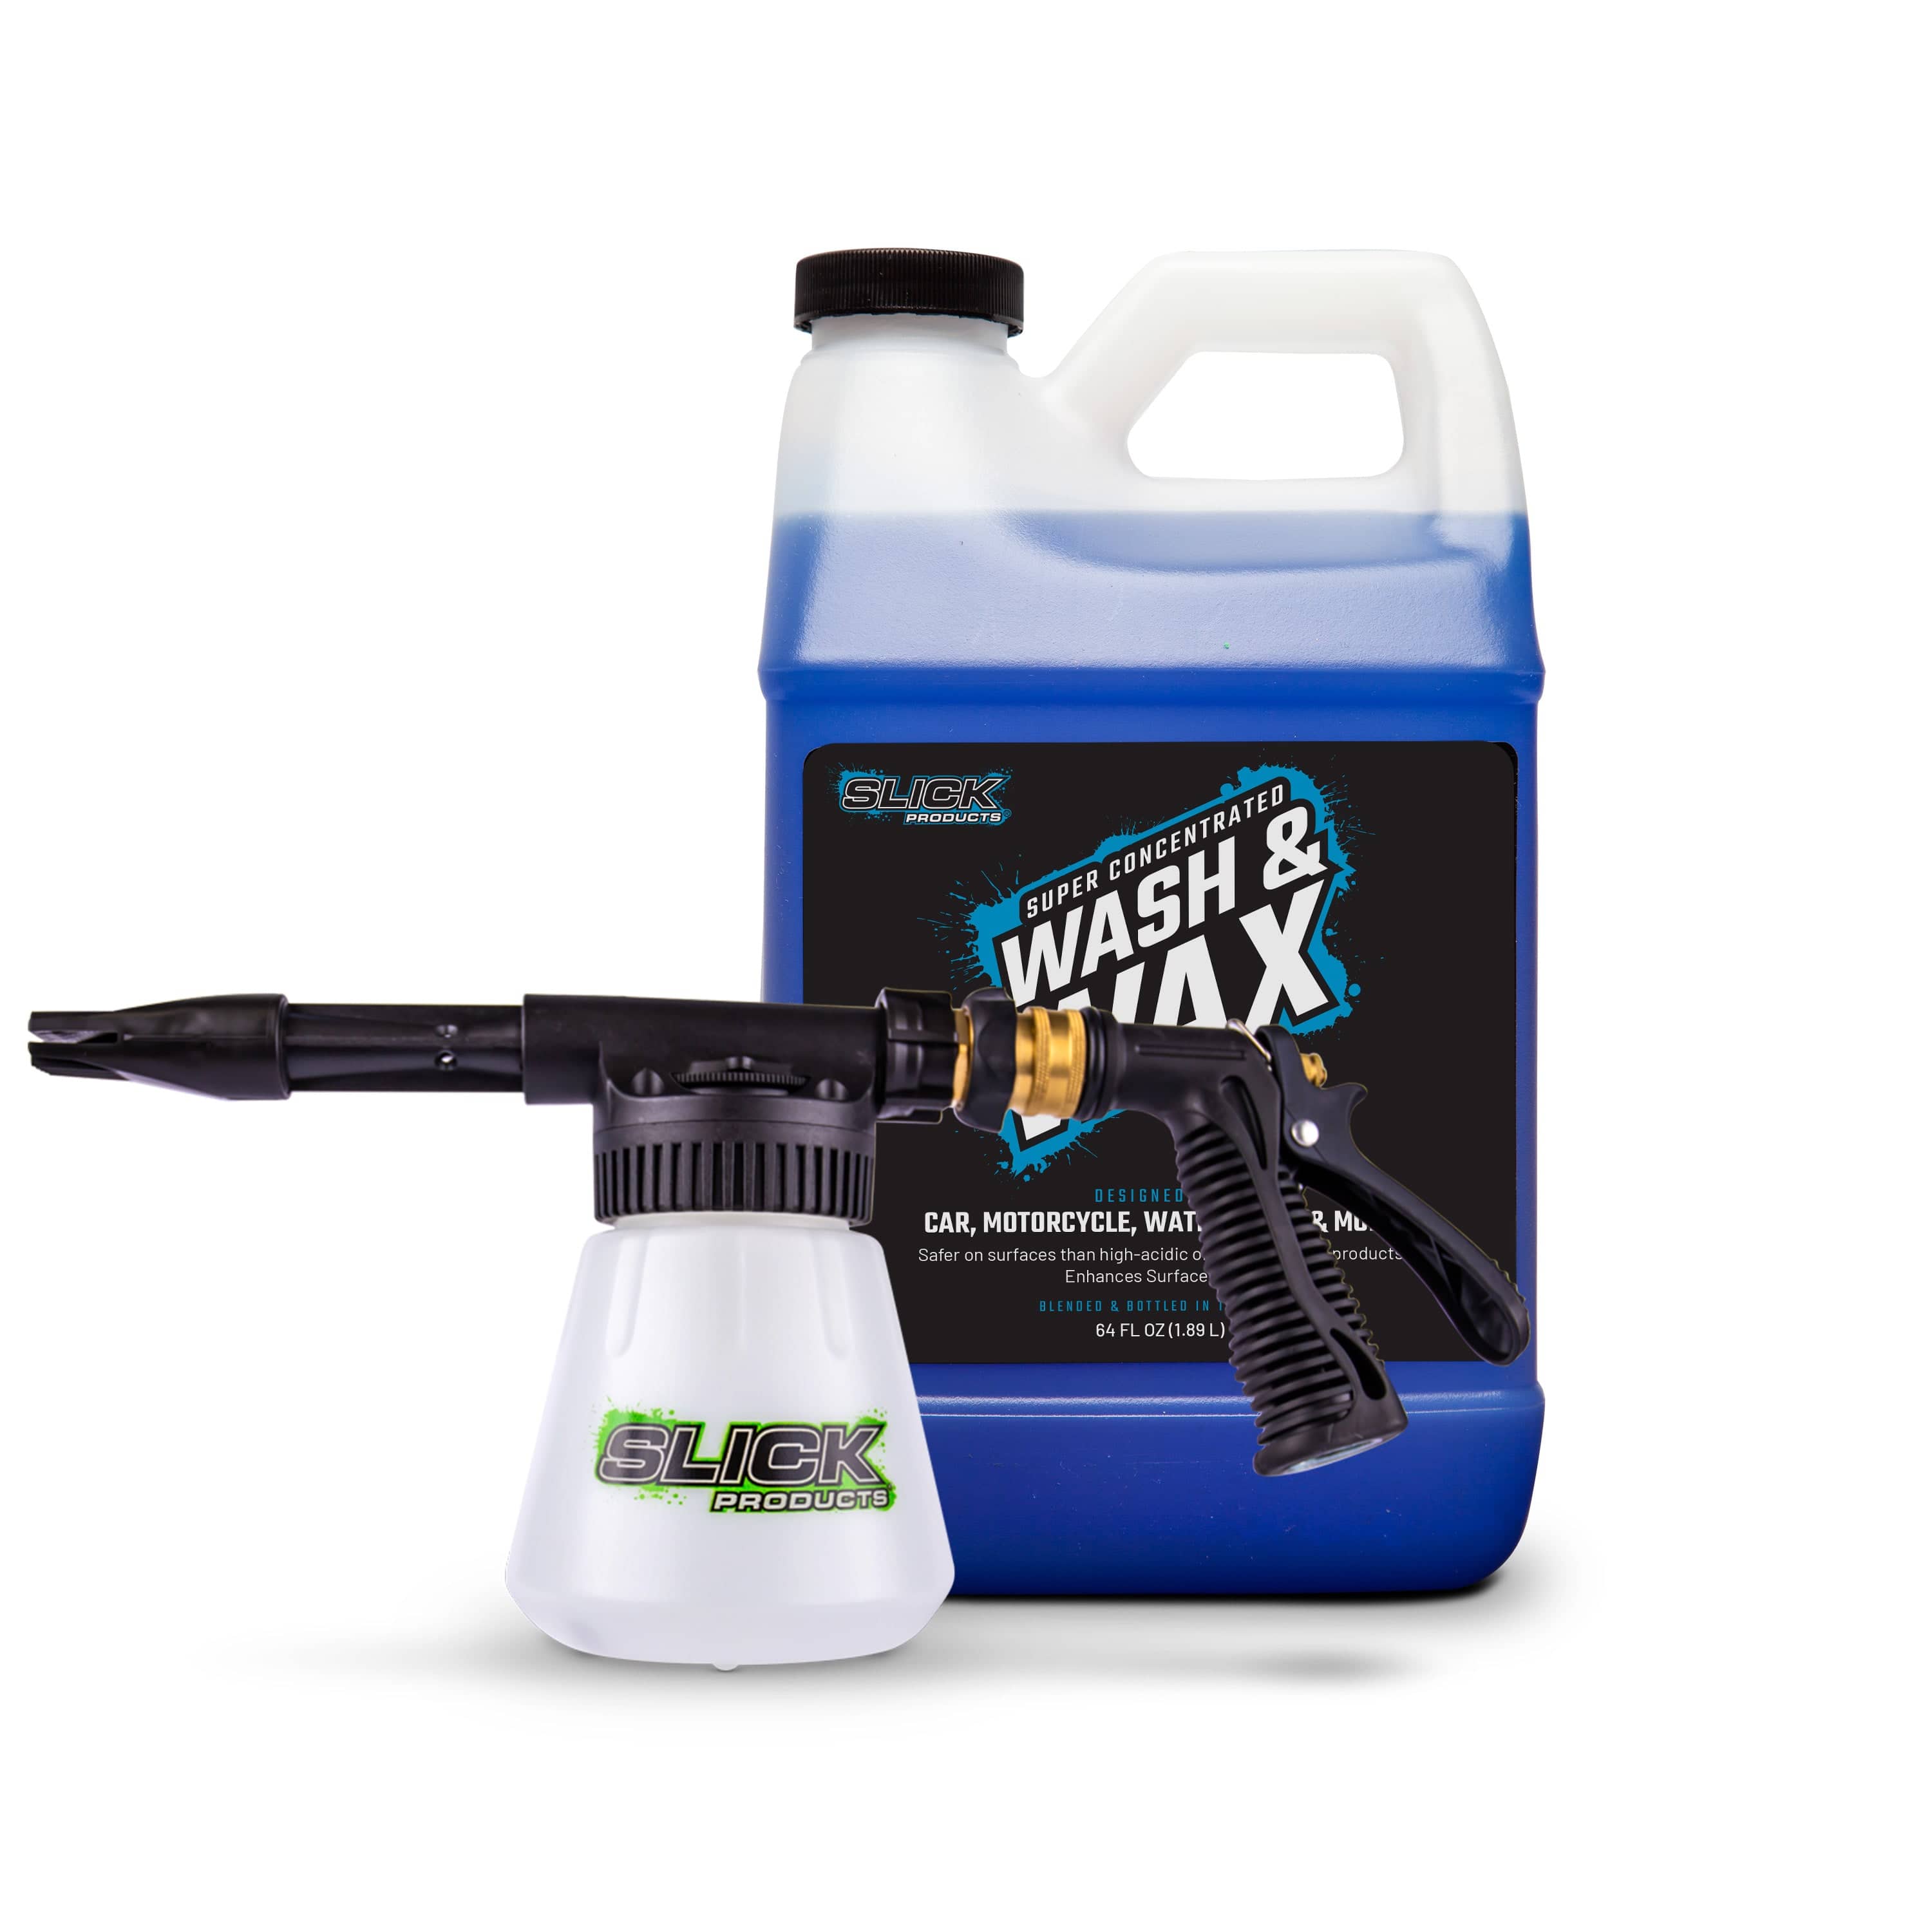 Turbo Wax Foam Gun and Turbo Wax Shampoo Professional Grade Combo